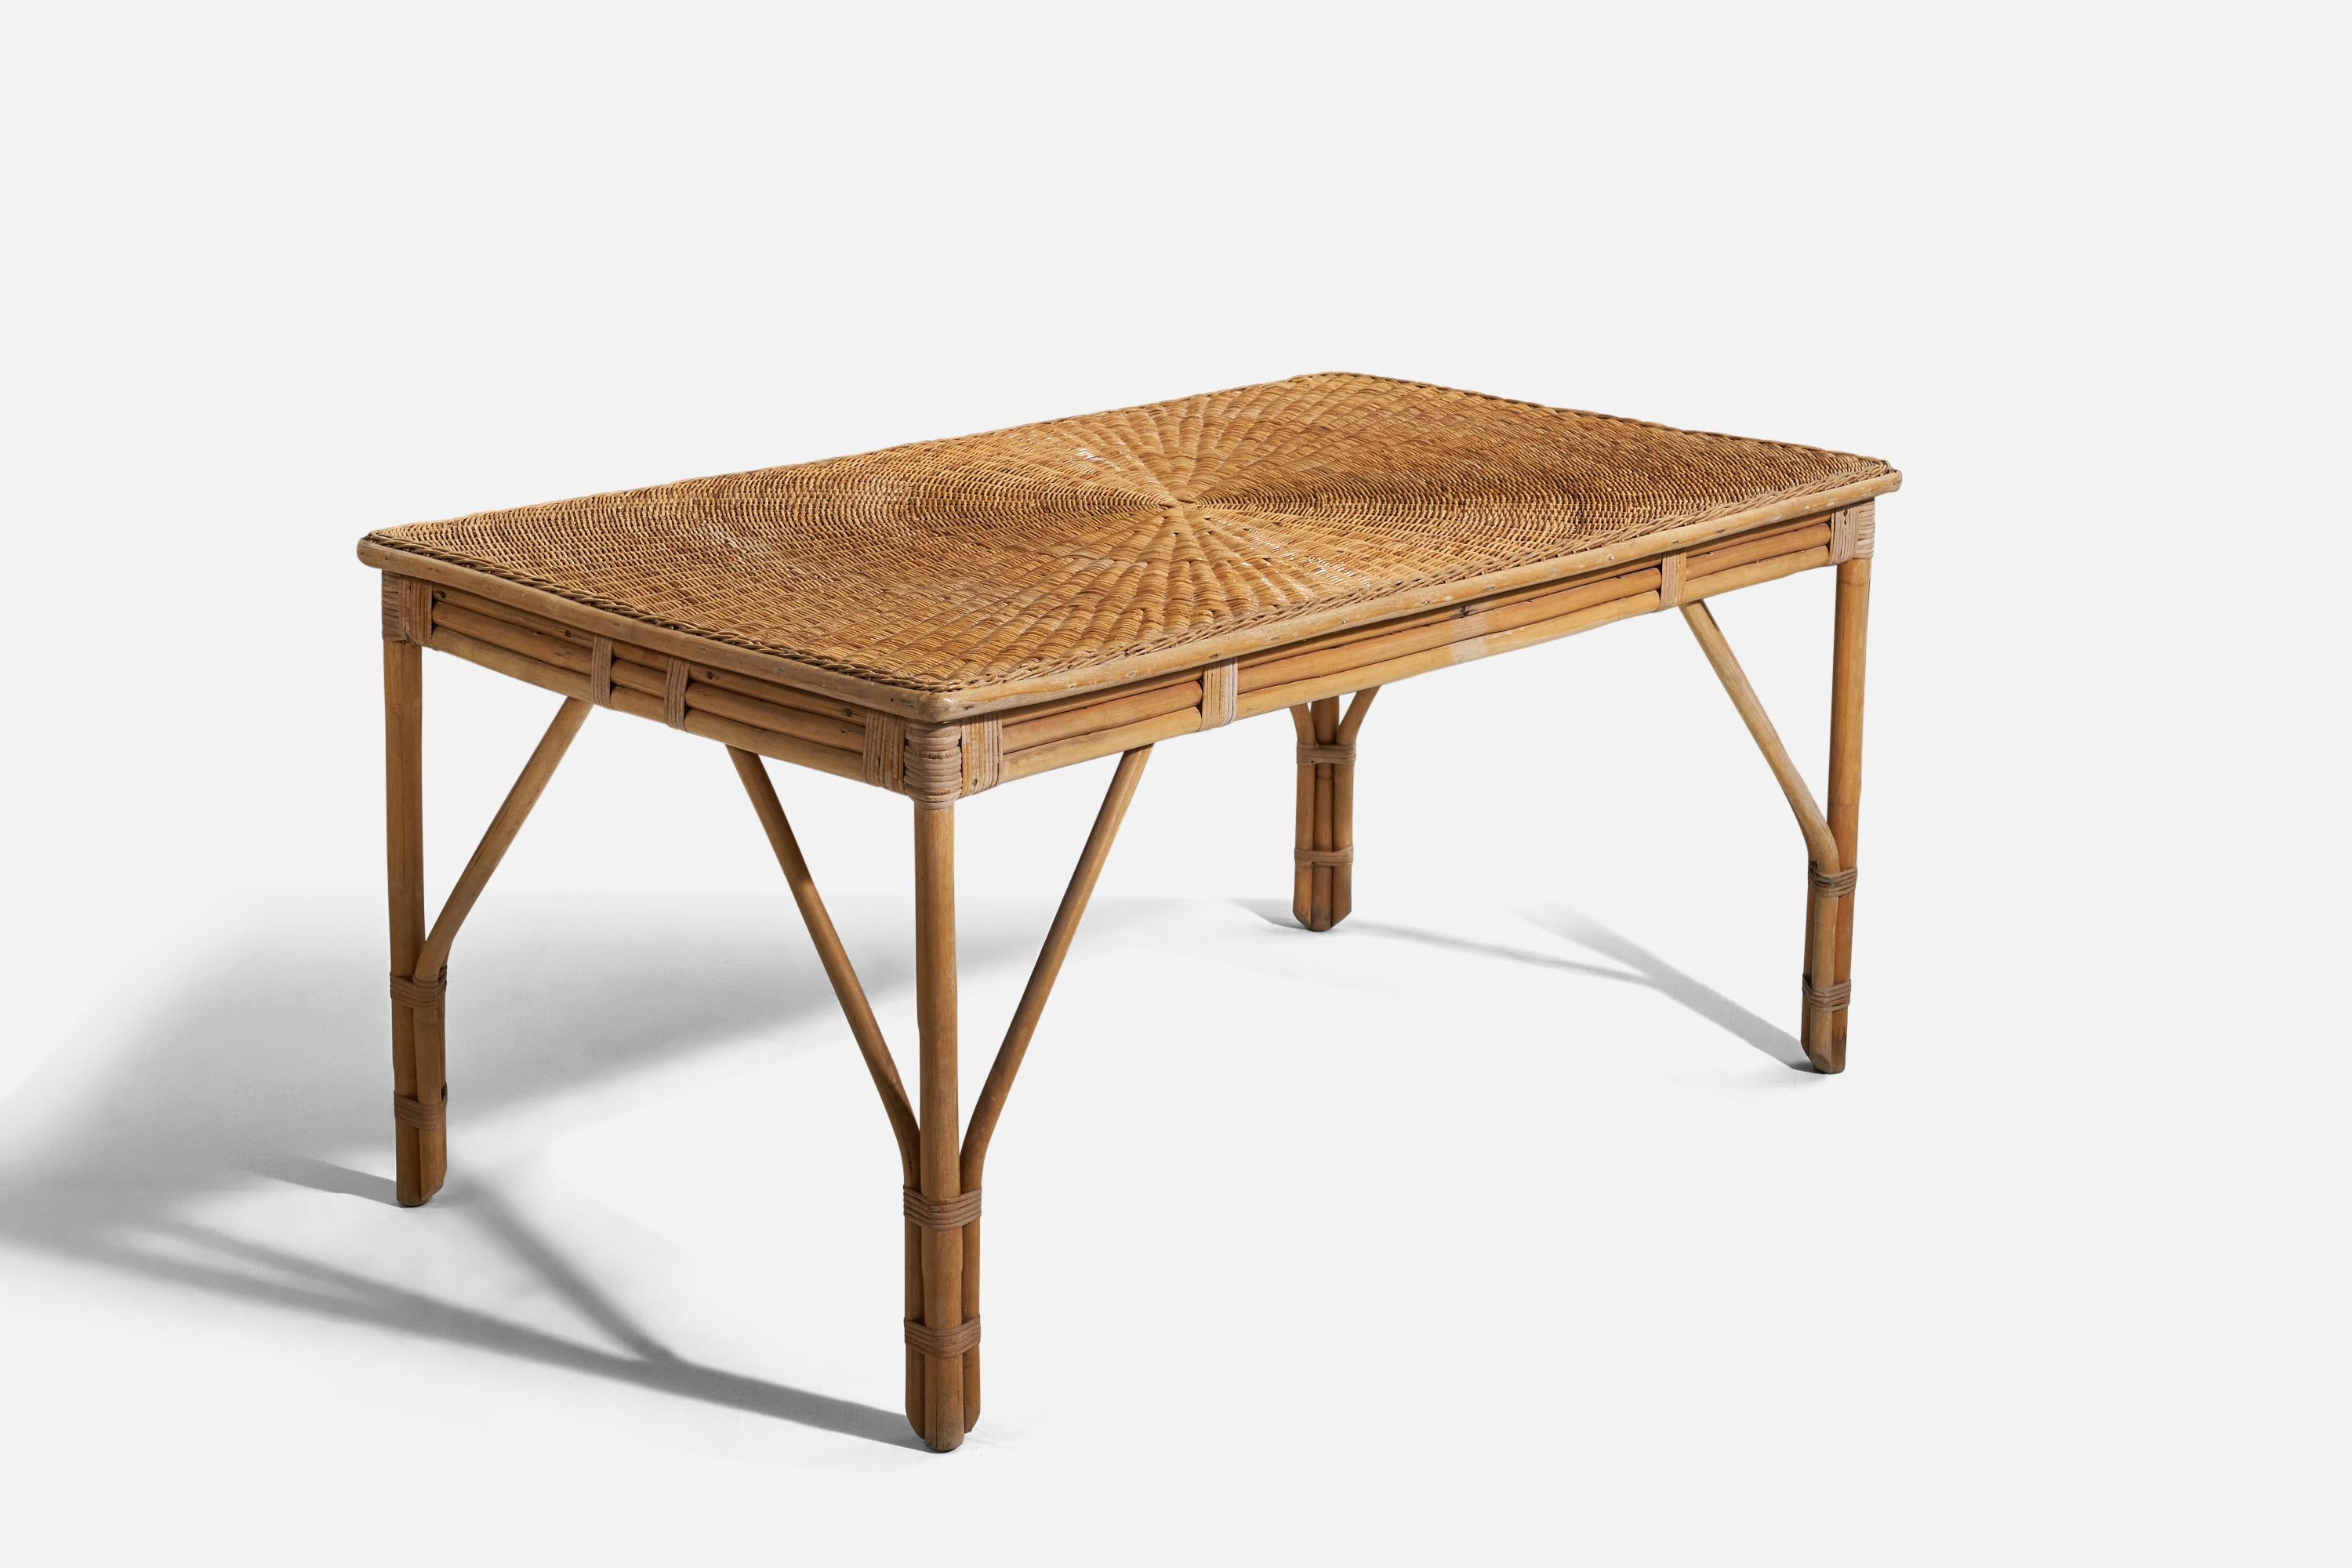 Scandinavian Modern Calif-Asia, Table, Bamboo, Rattan, USA, c. 1970s